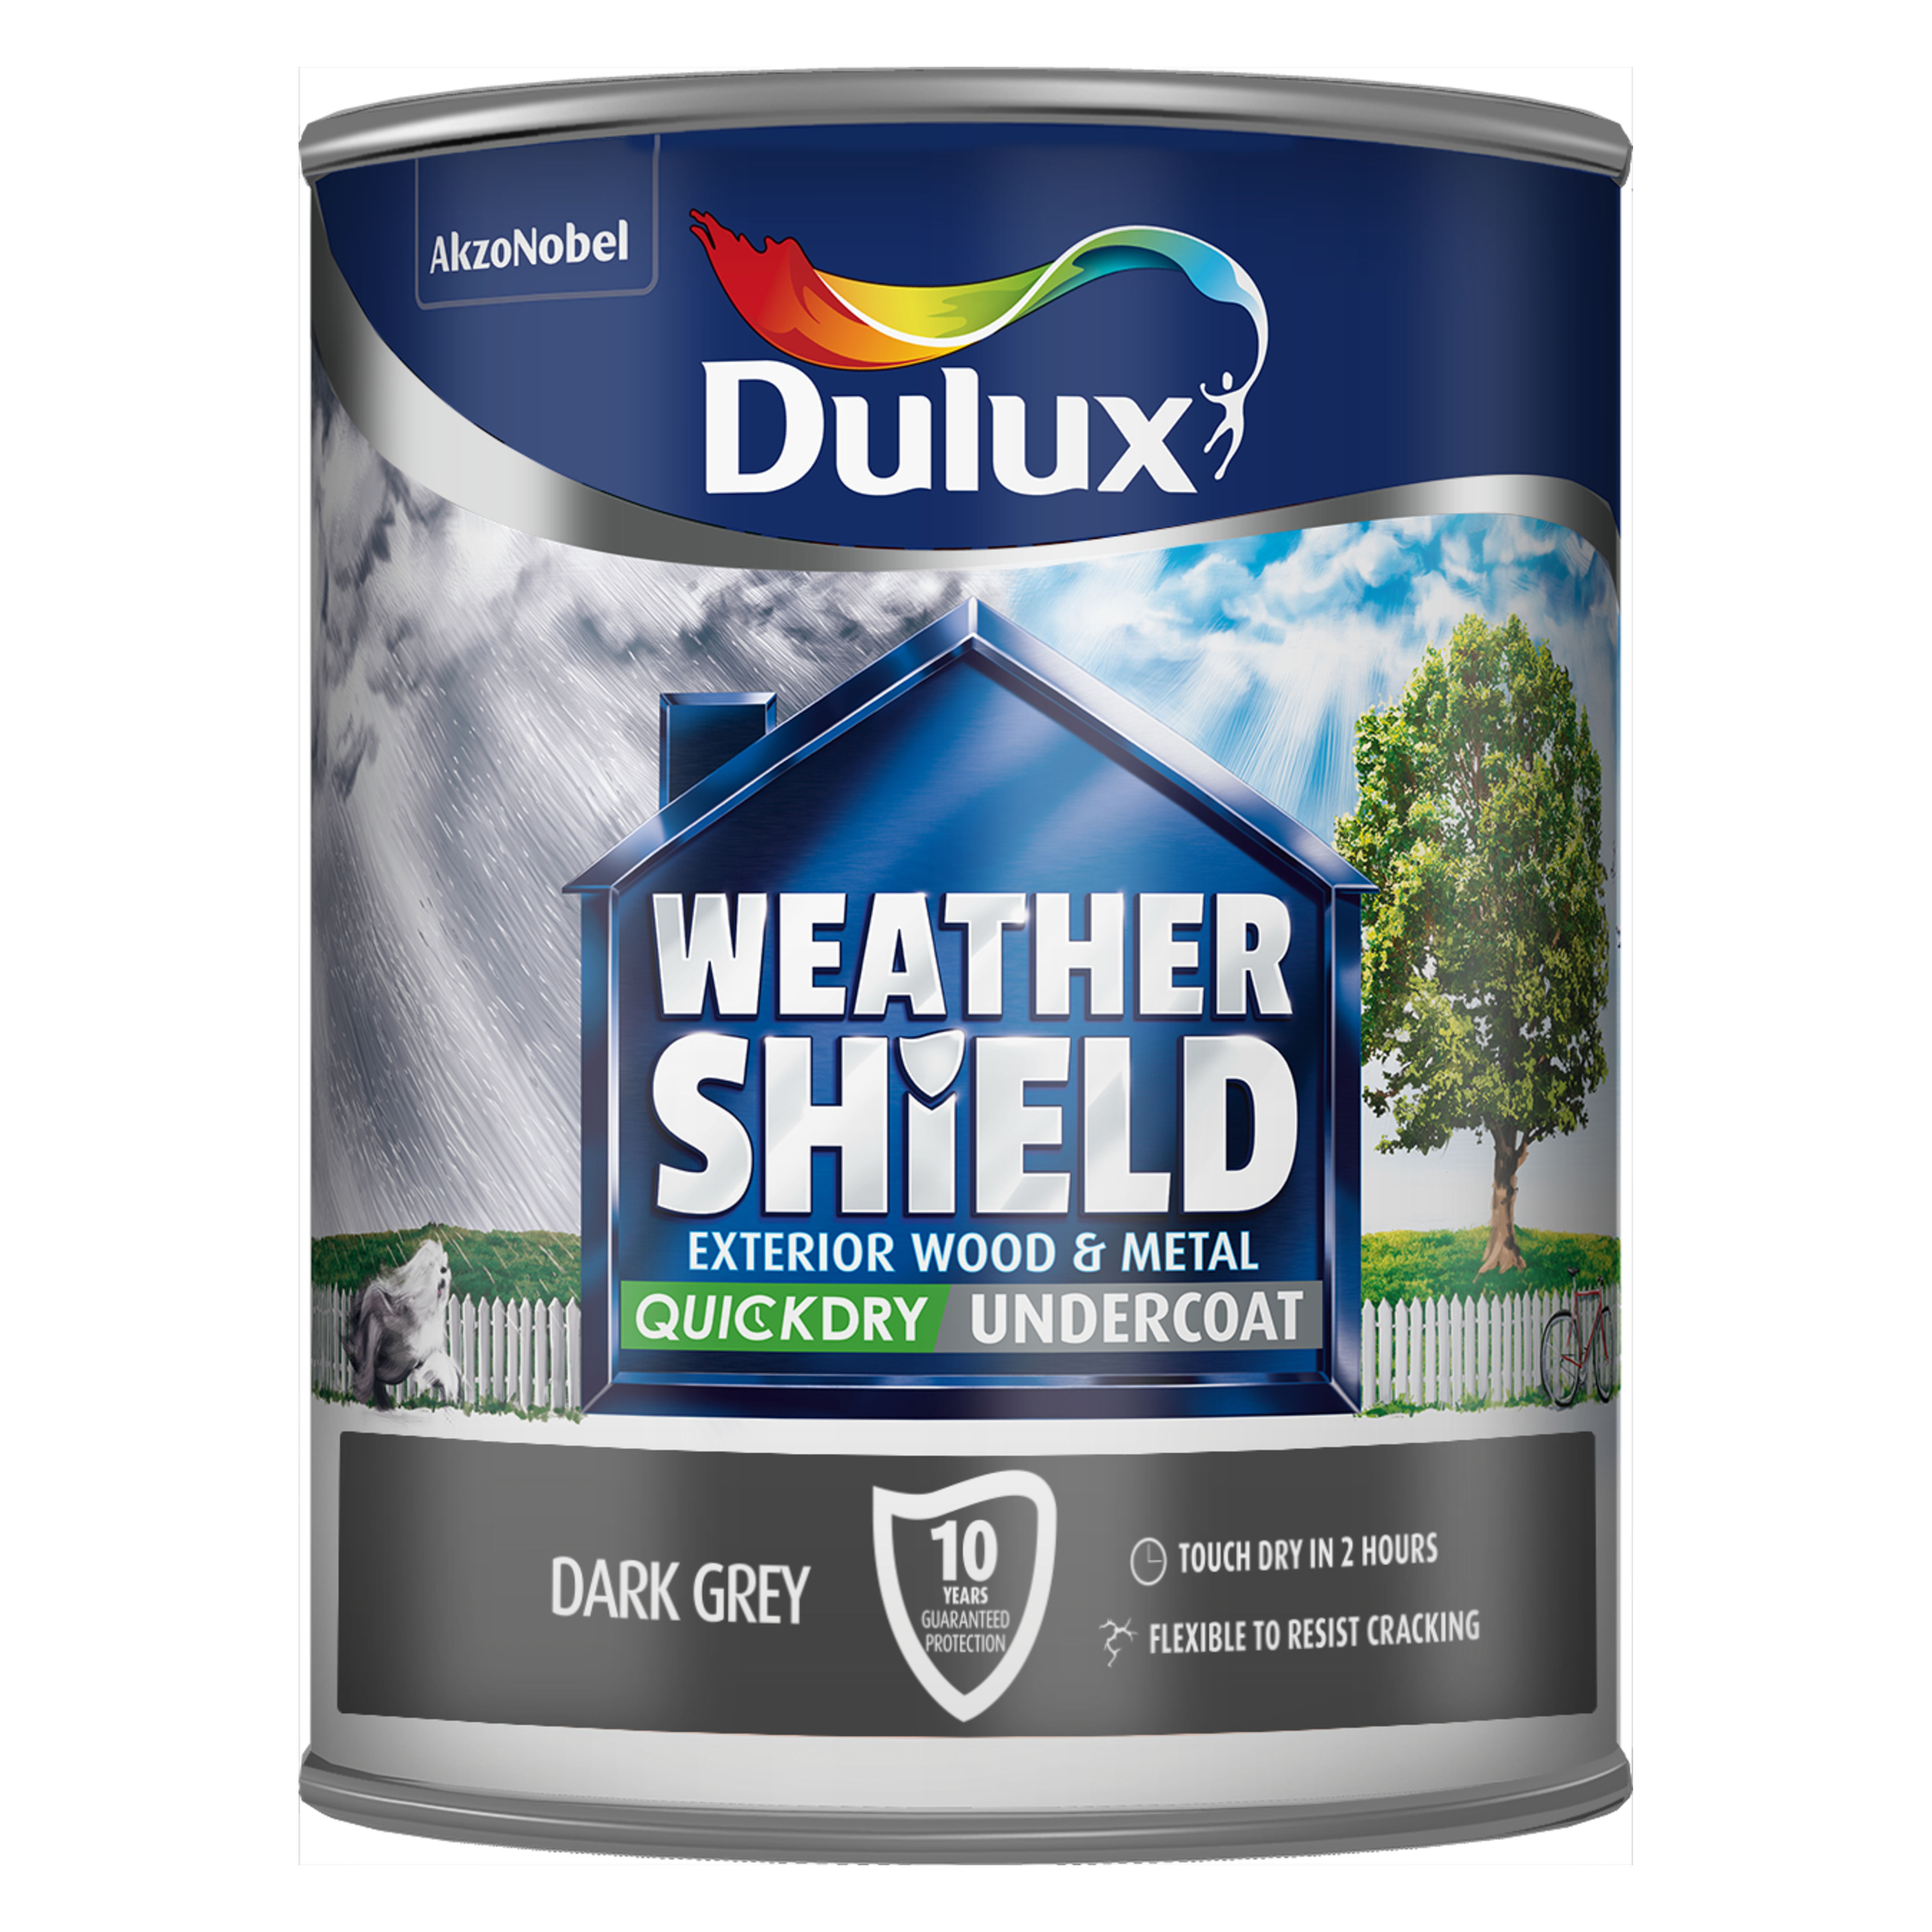 Dulux Weathershield Quick Dry Undercoat Paint - Dark Grey (750ml)